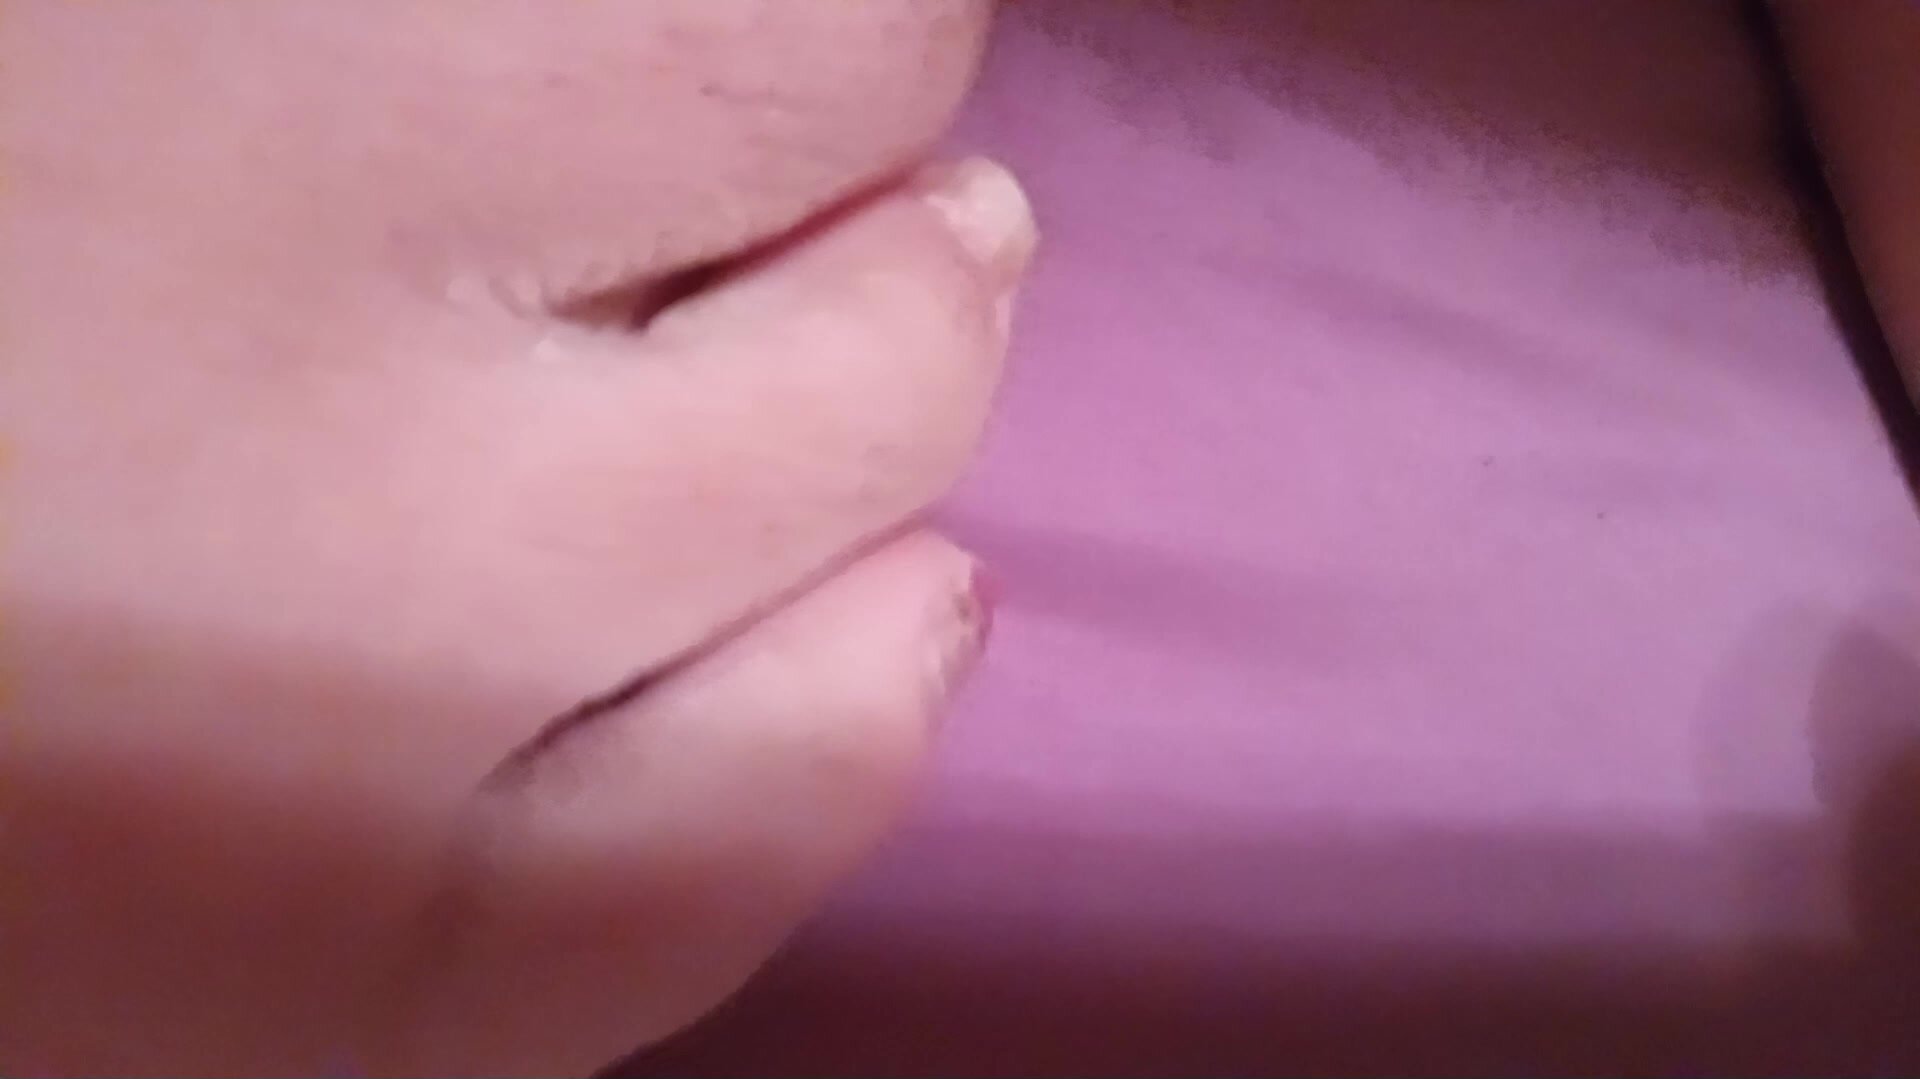 Crusty toes